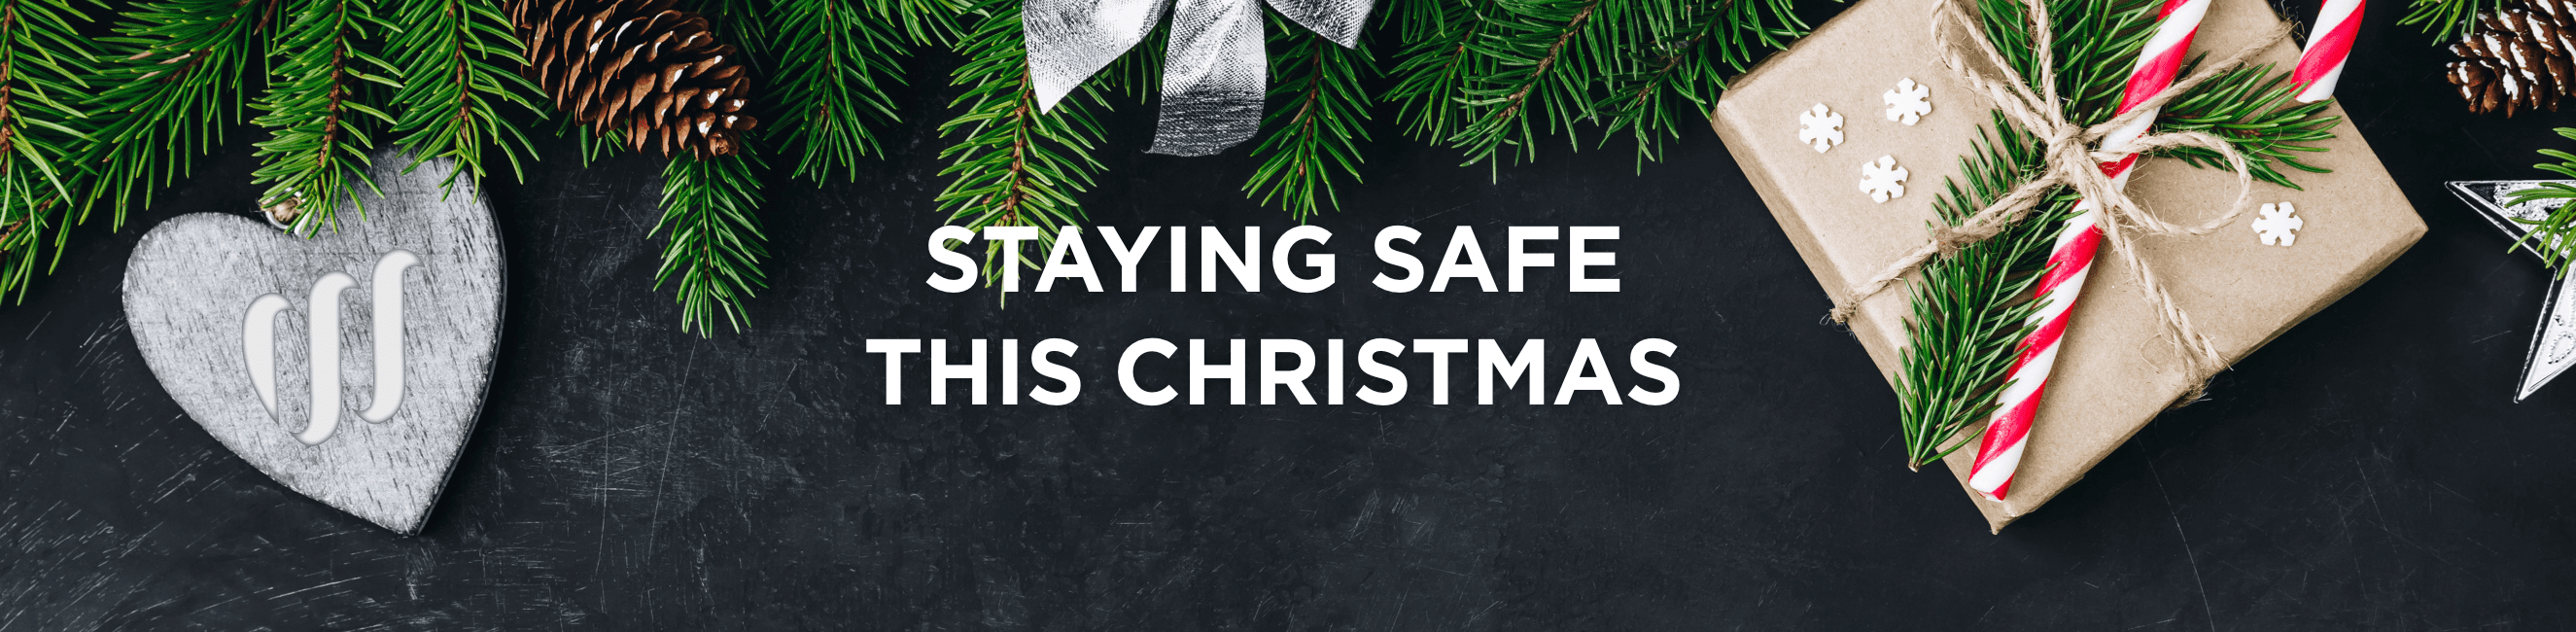 Staying Safe at Christmas